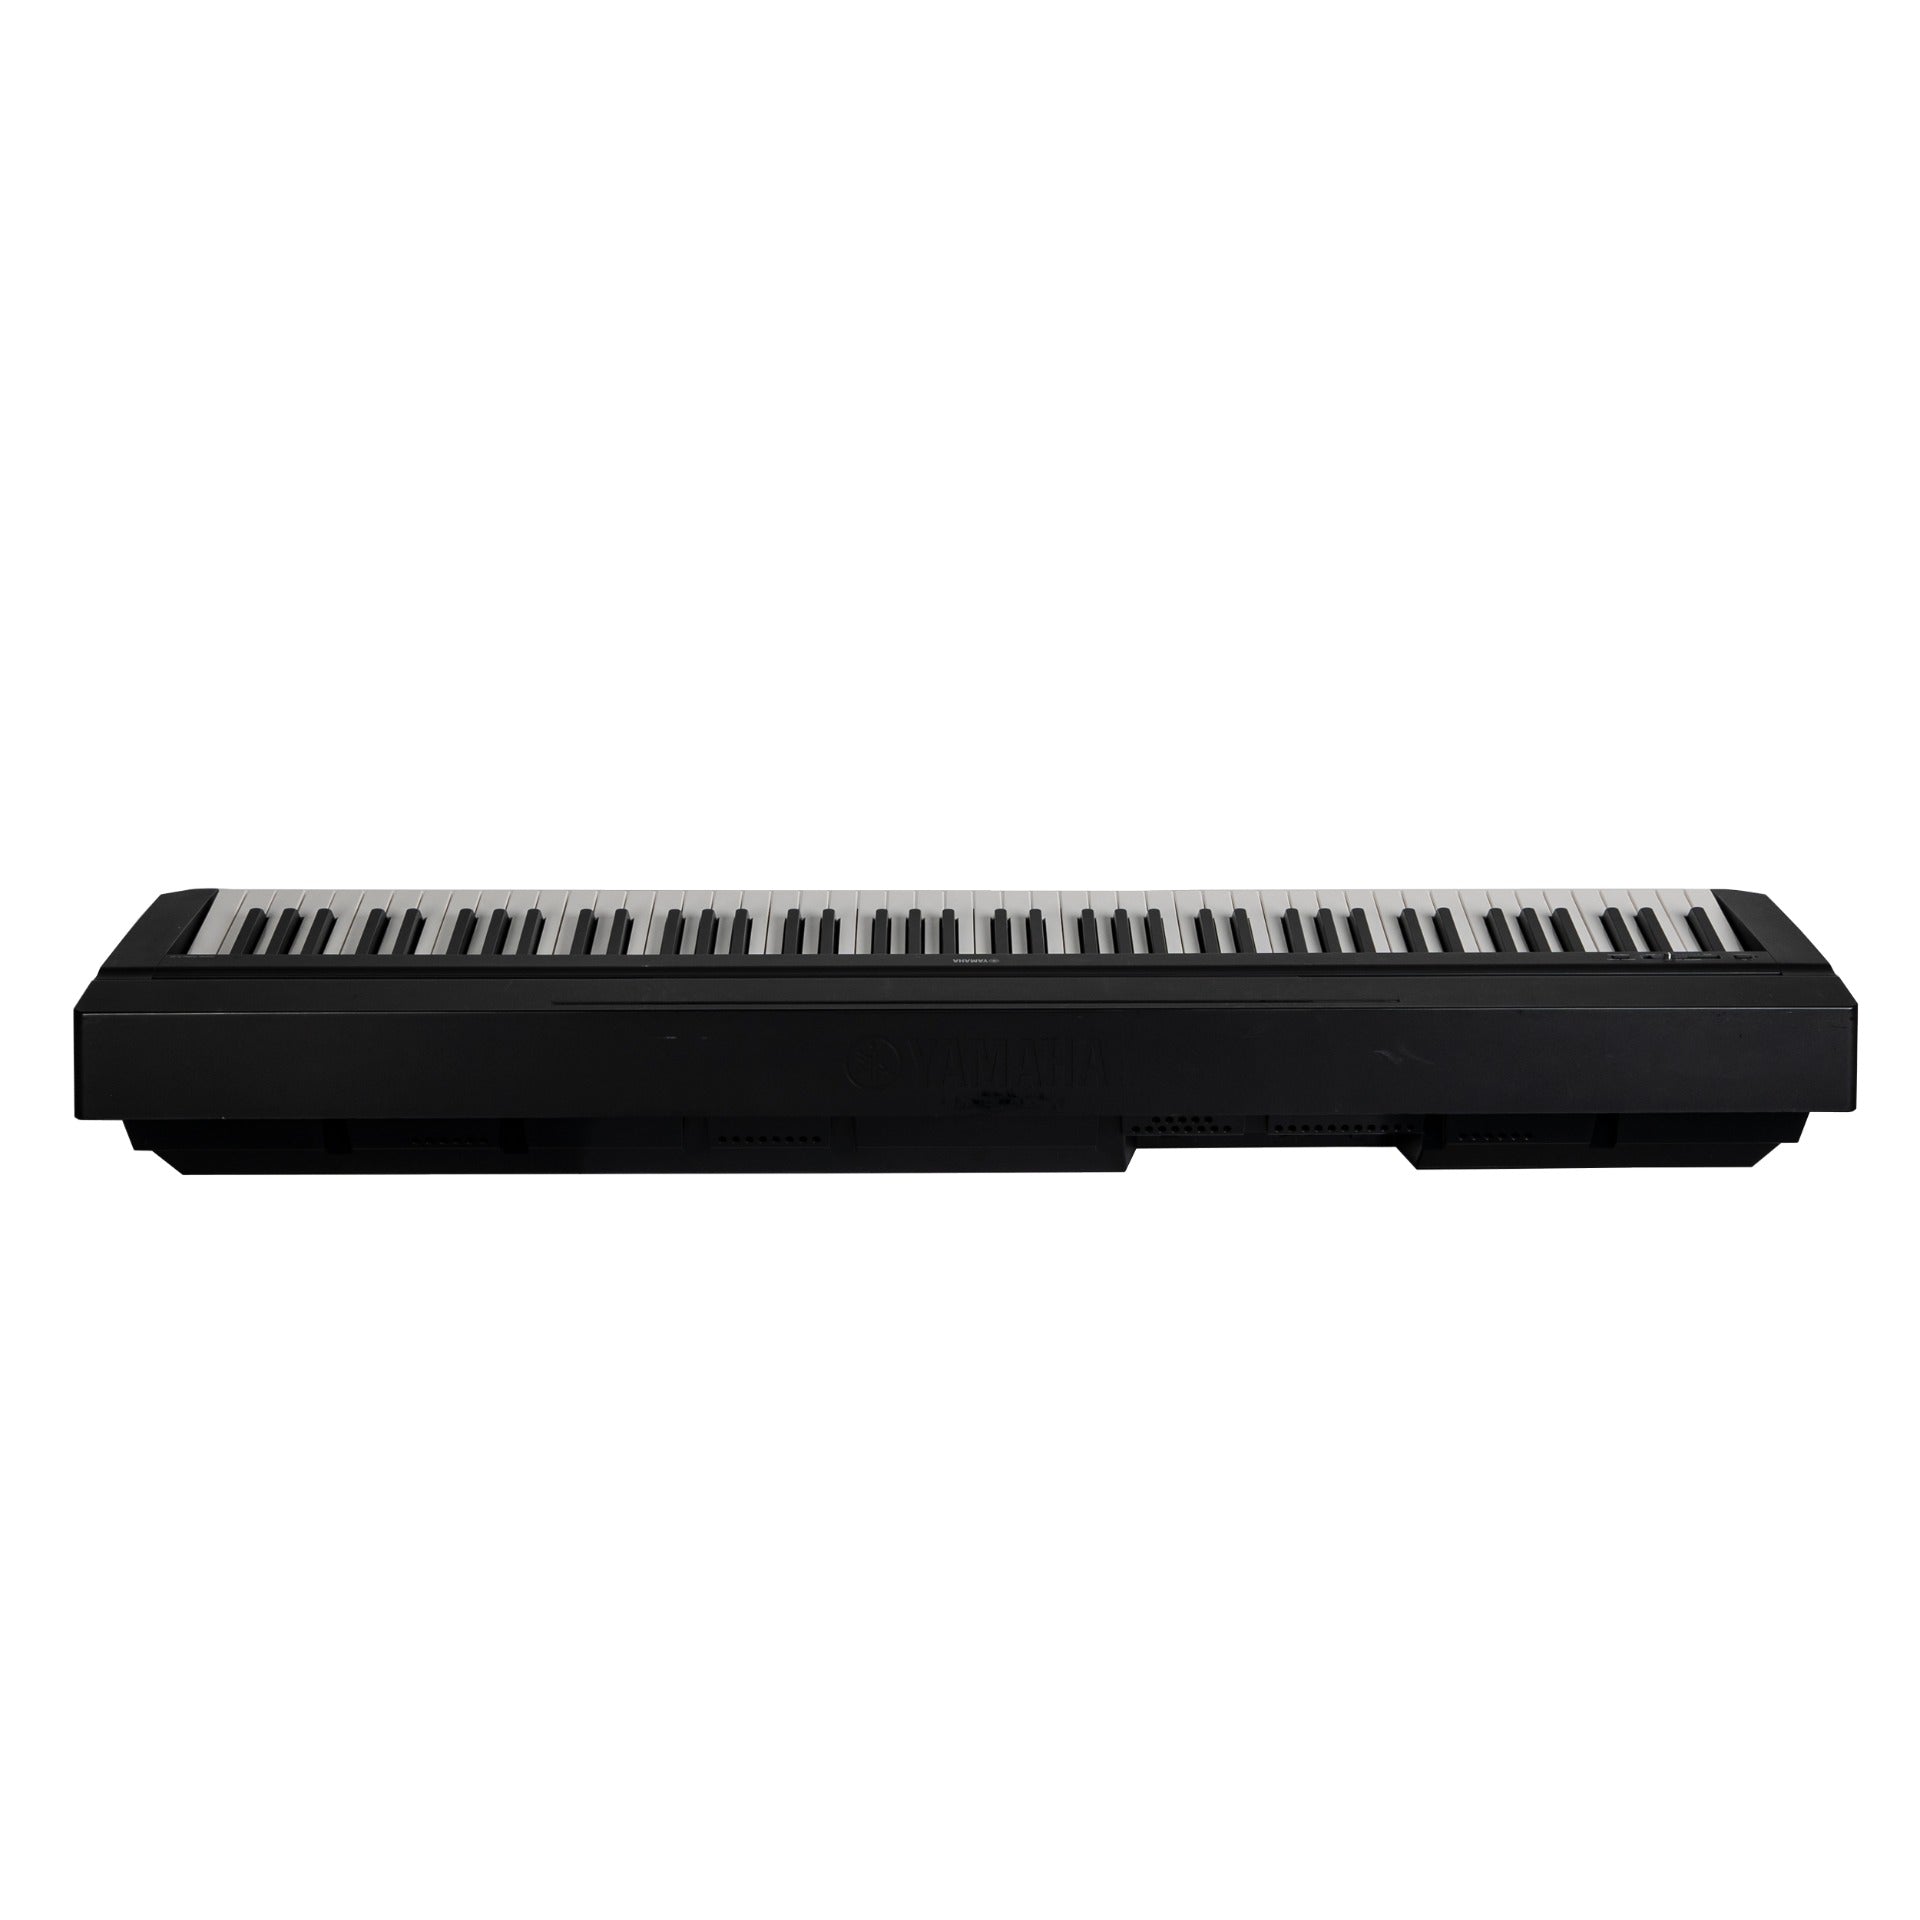 Yamaha P45 Digital Piano - Review & Demo 